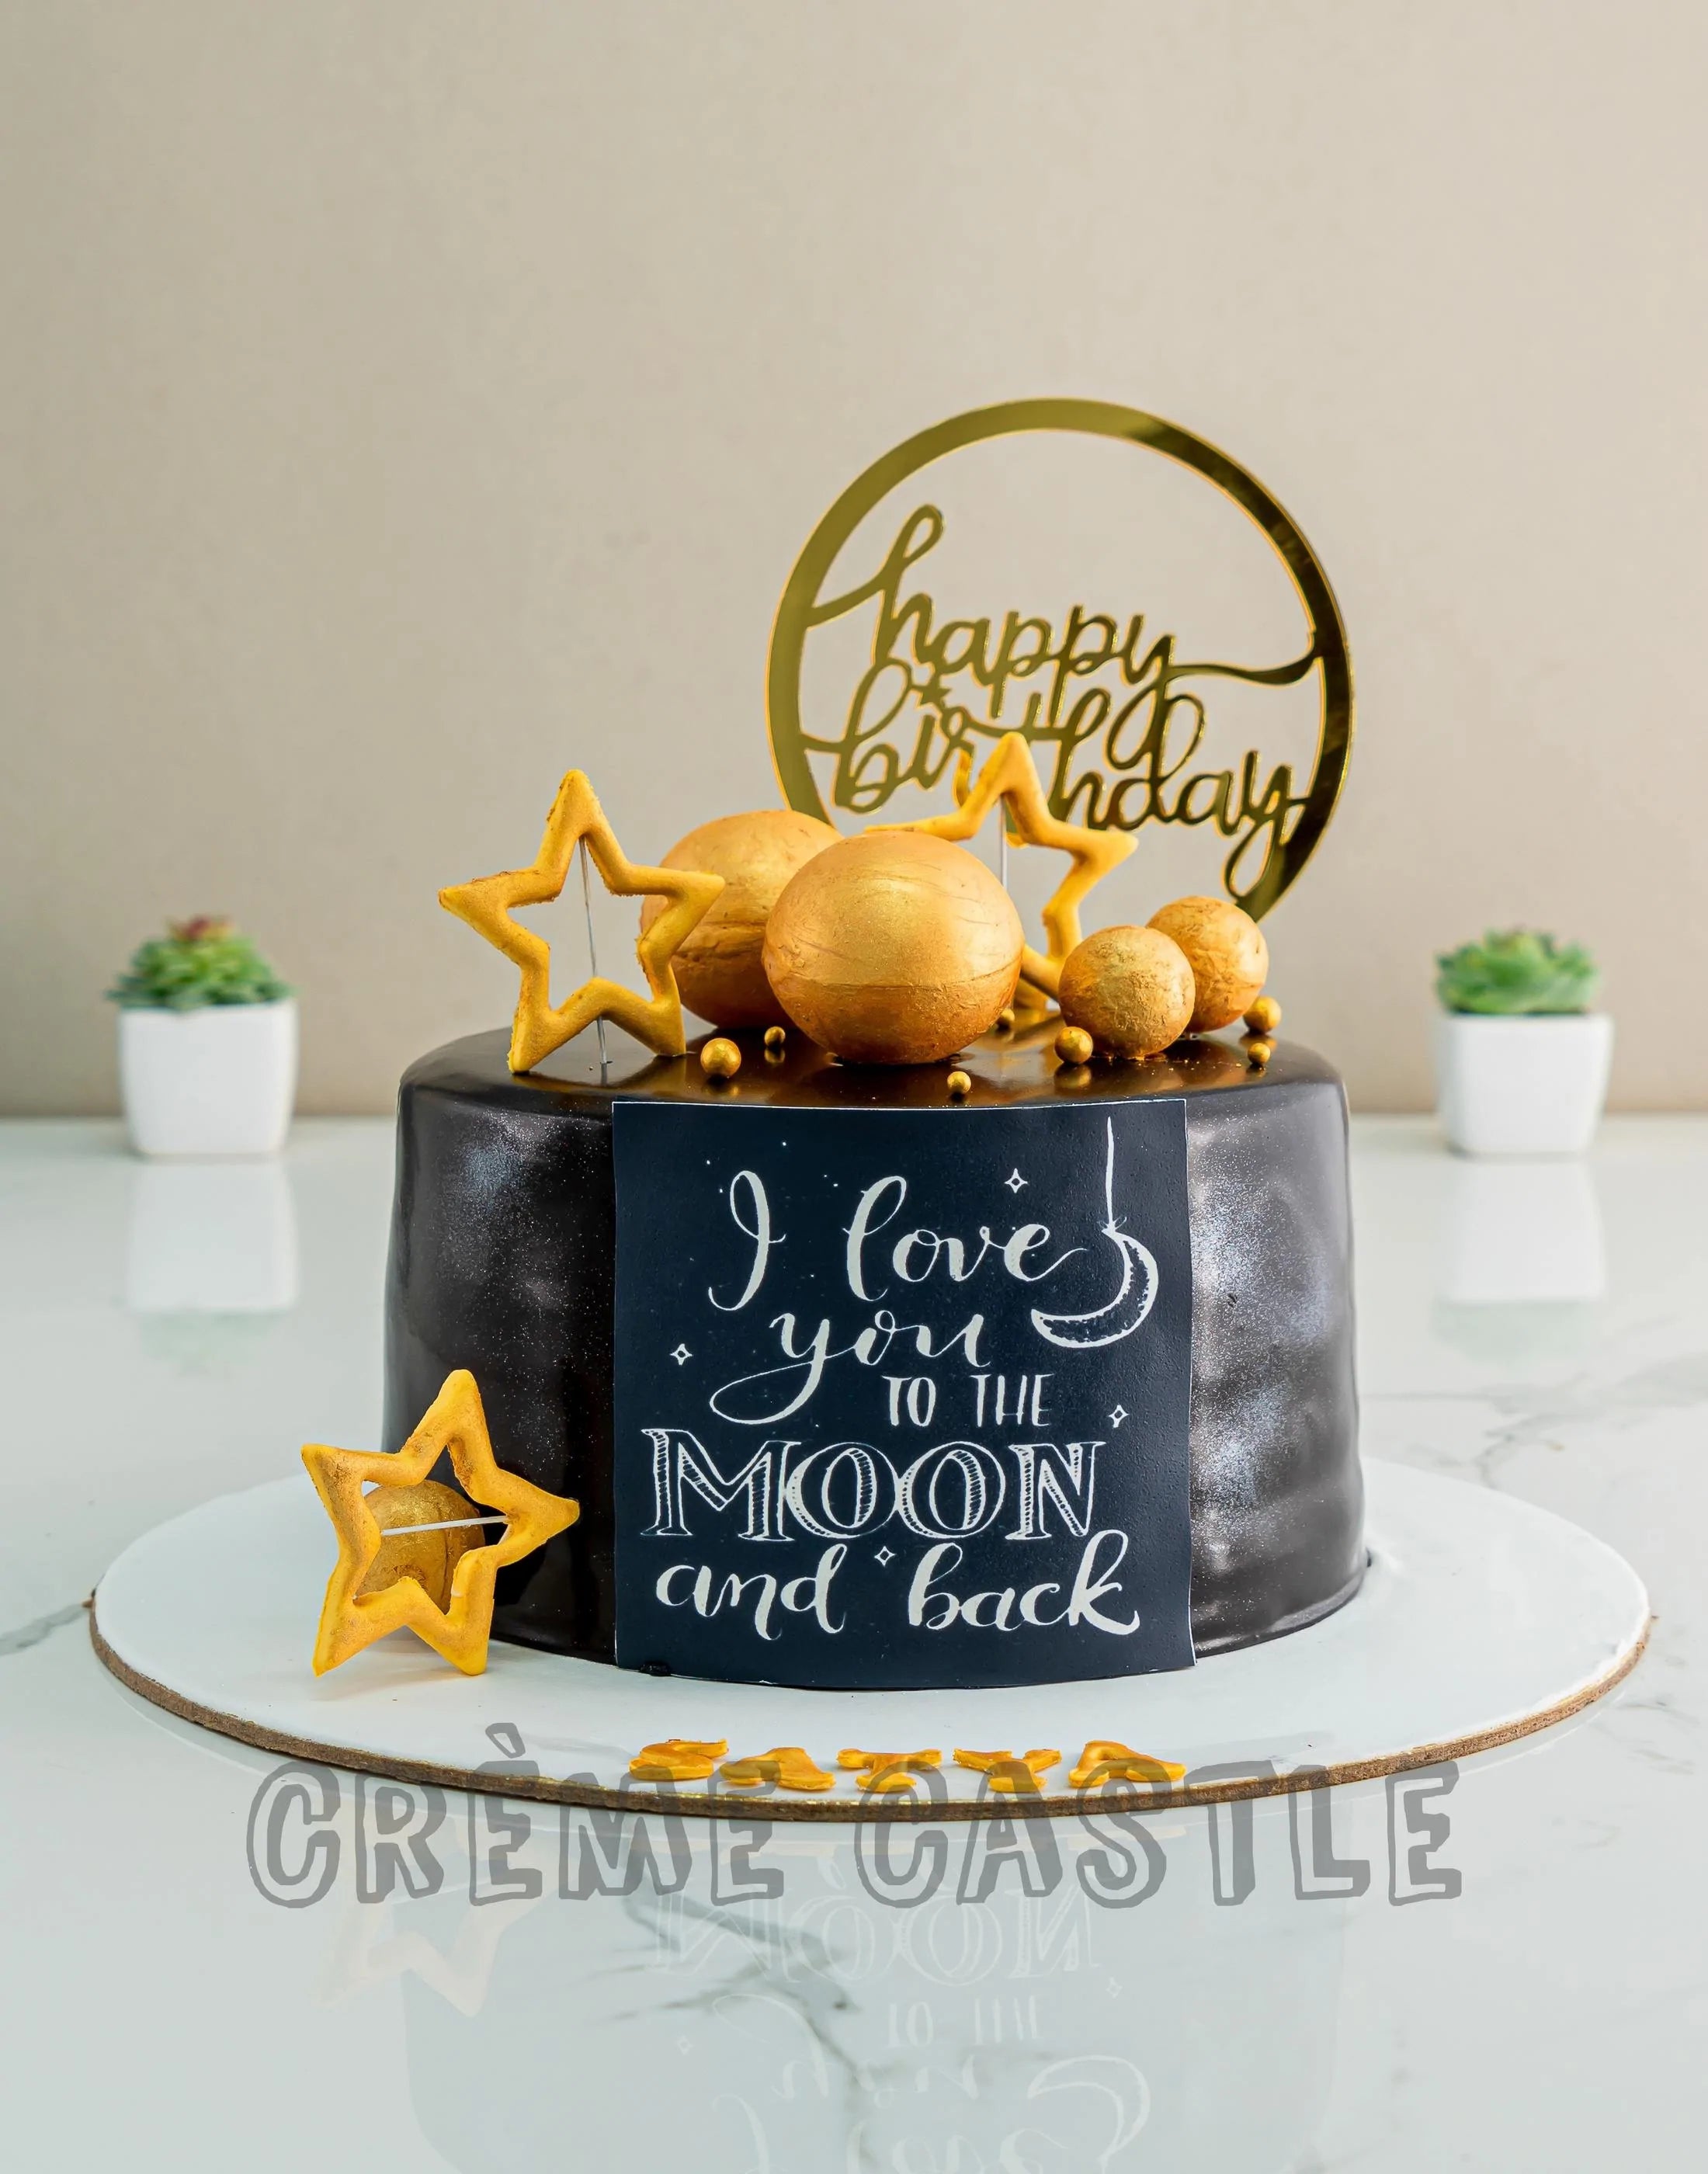 Wife's birthday.Husband surprise his wife with birthday cake .Anniversary.  Stock Photo | Adobe Stock